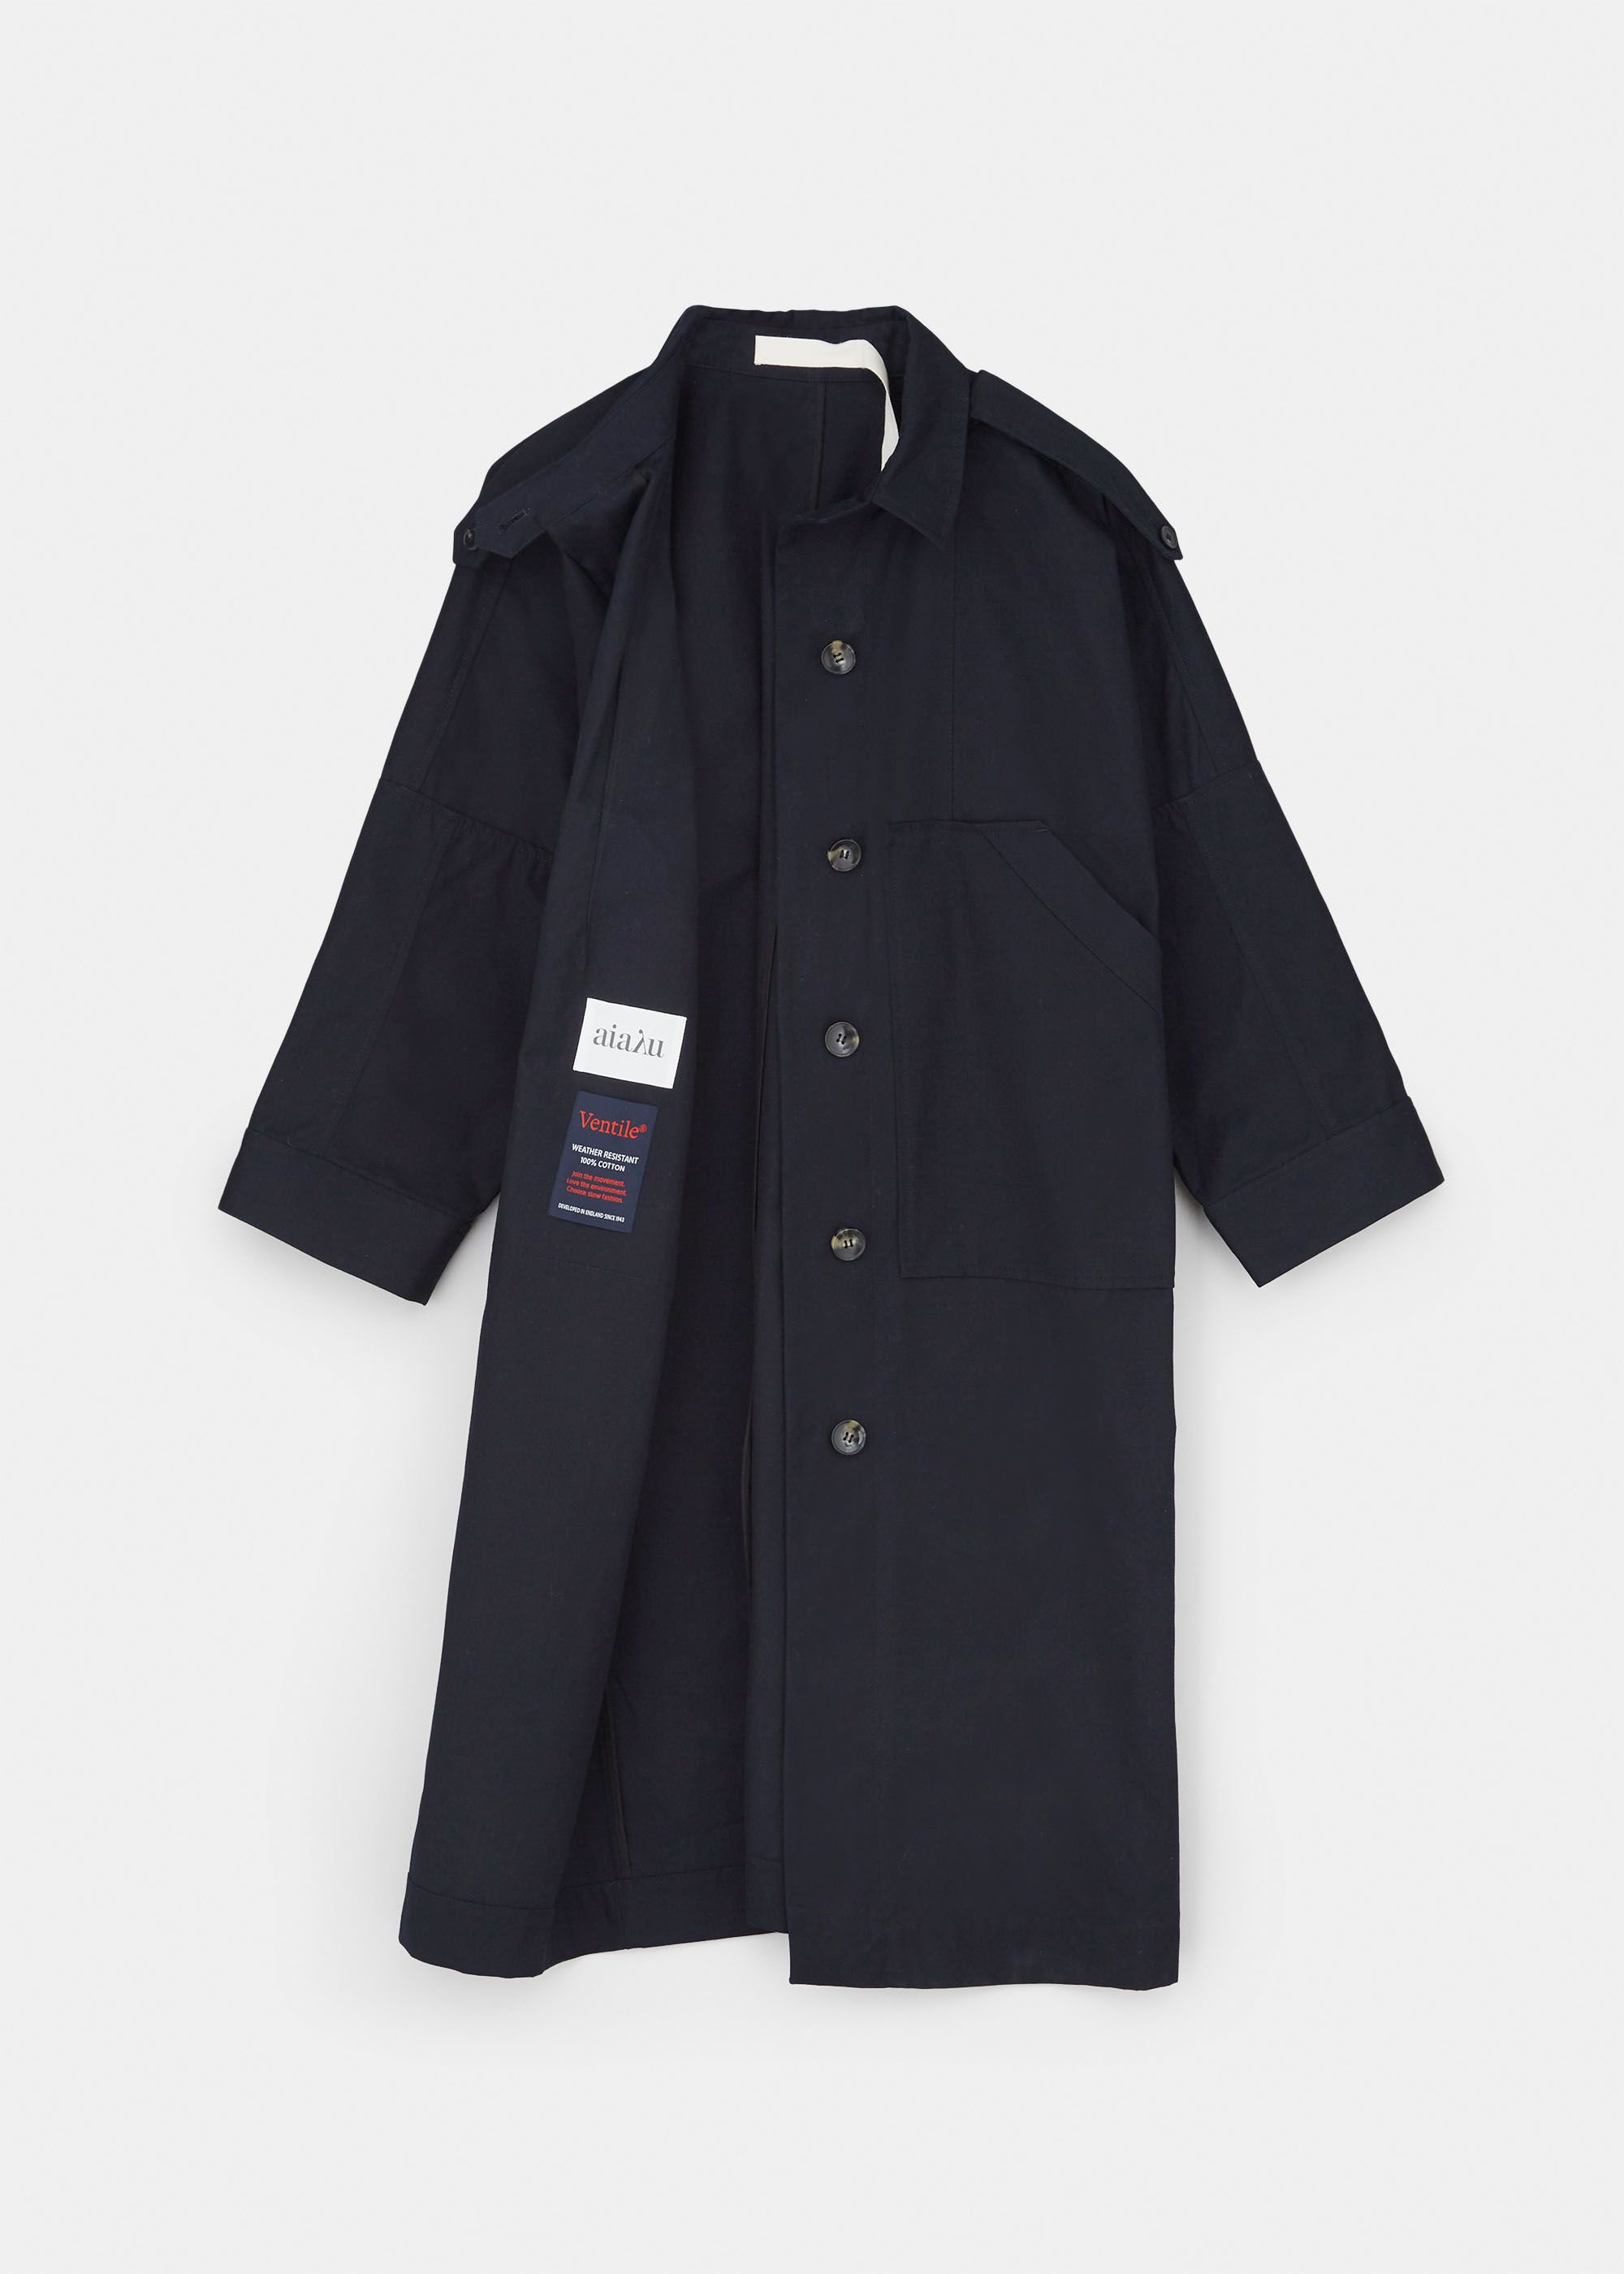 Outerwear - Jean ventile coat